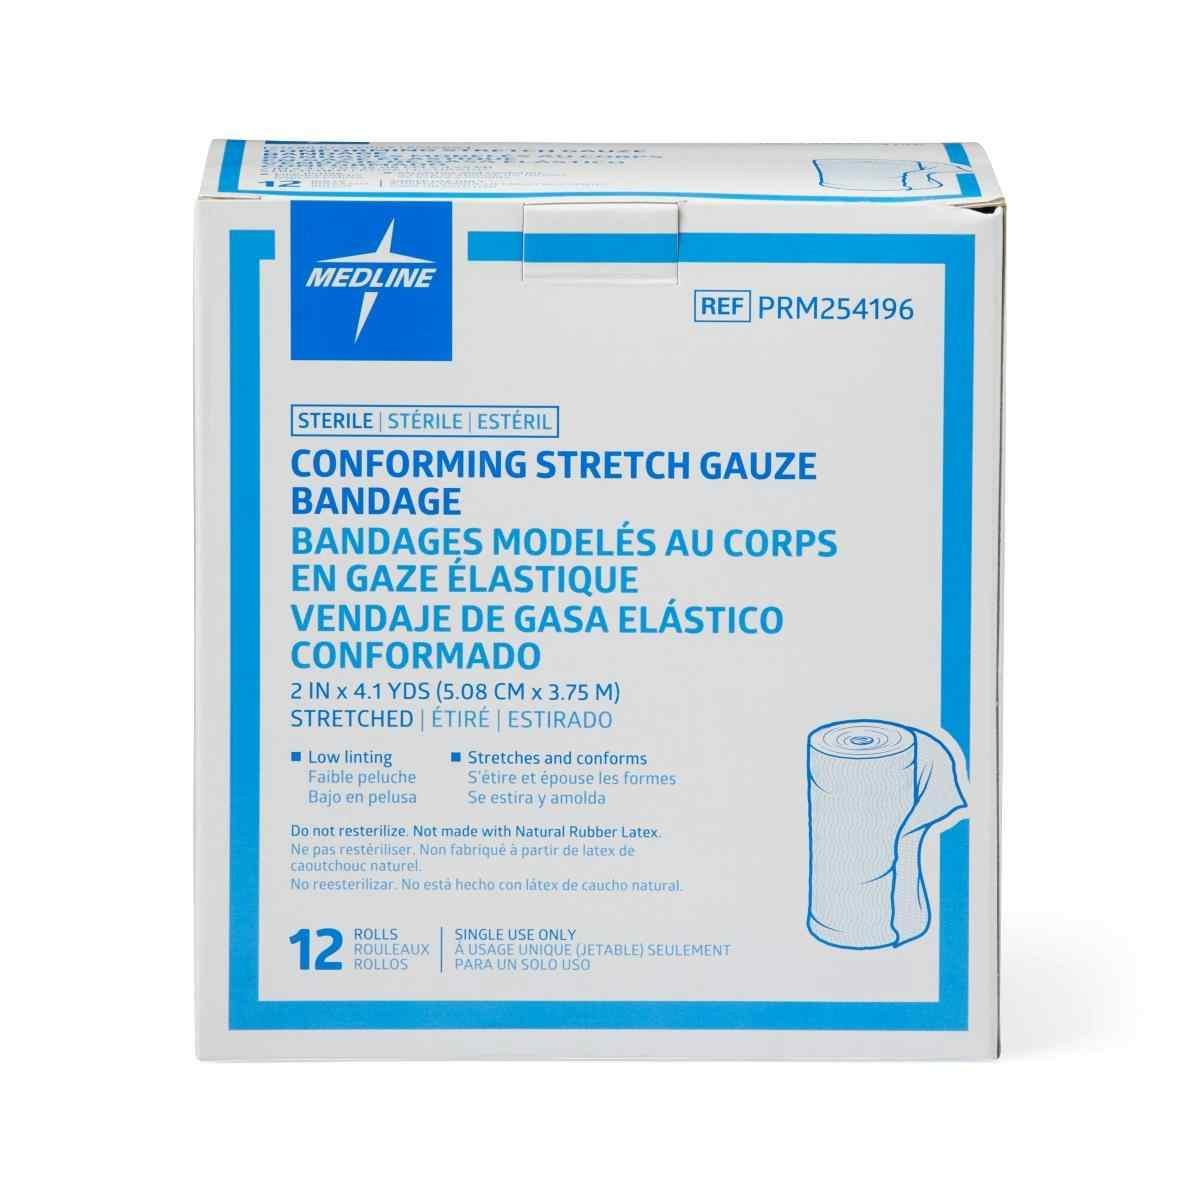 Medline Conforming Stretch Gauze Bandages, Light Weight, PRM254196, 2" X 4.1 yd. - Case of 96